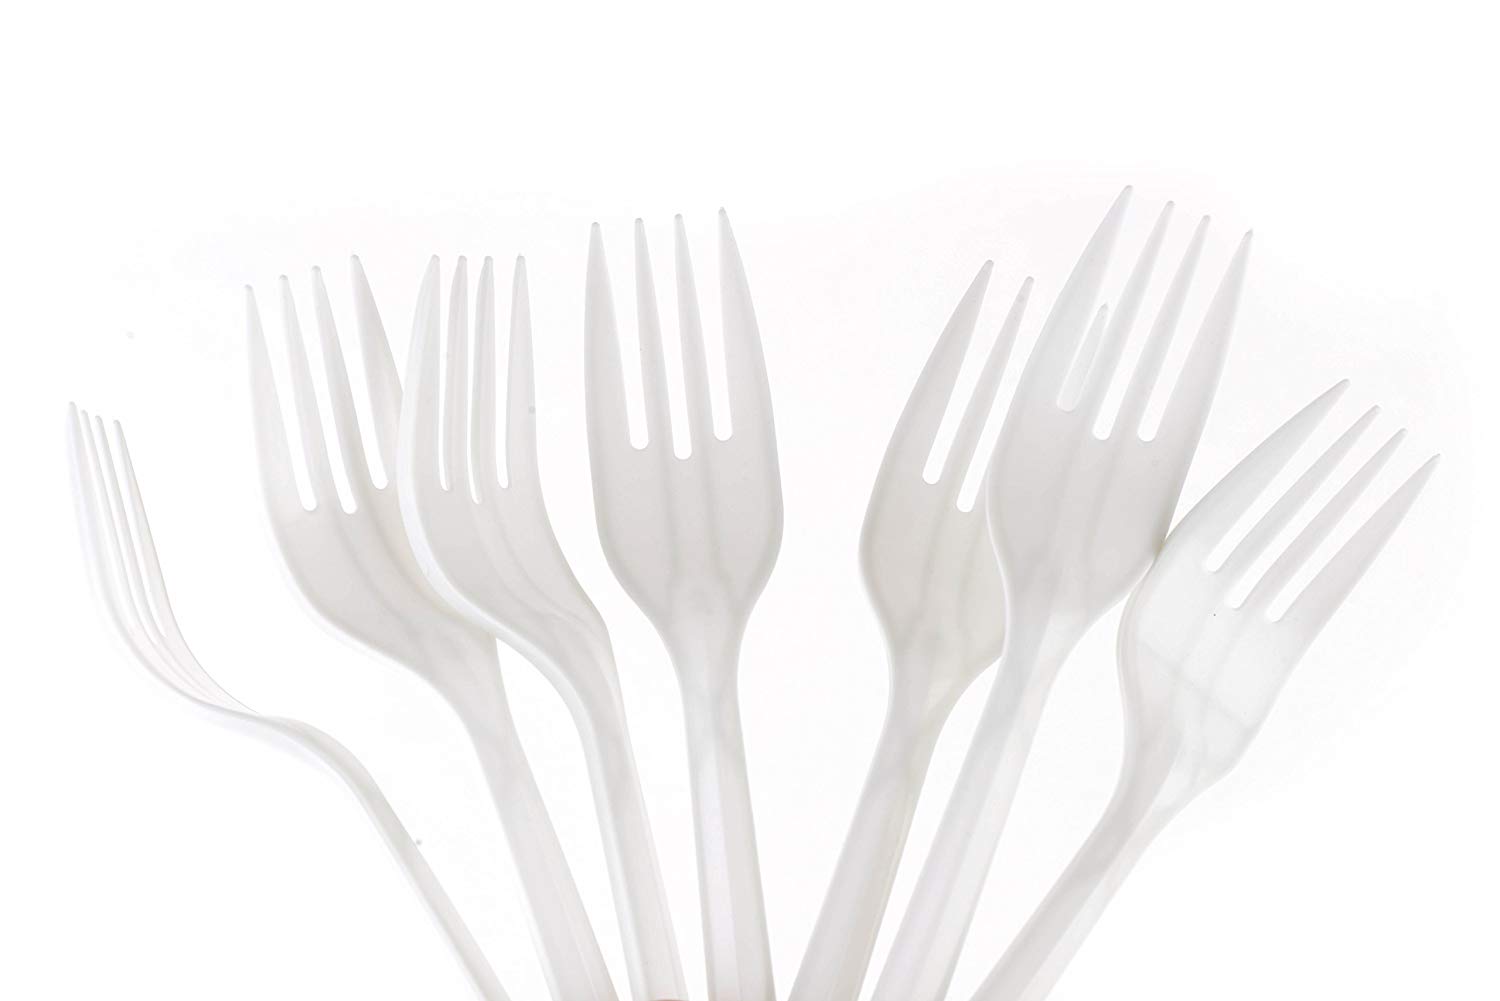 Wholesale Cutlery Utensils  Restaurant supplies  White Black Forks  Heavy Duty Disposable Forks  disposable forks  To Go Cutlery  Take Out Cutlery  Take Out Utensils  Restaurant Cutlery